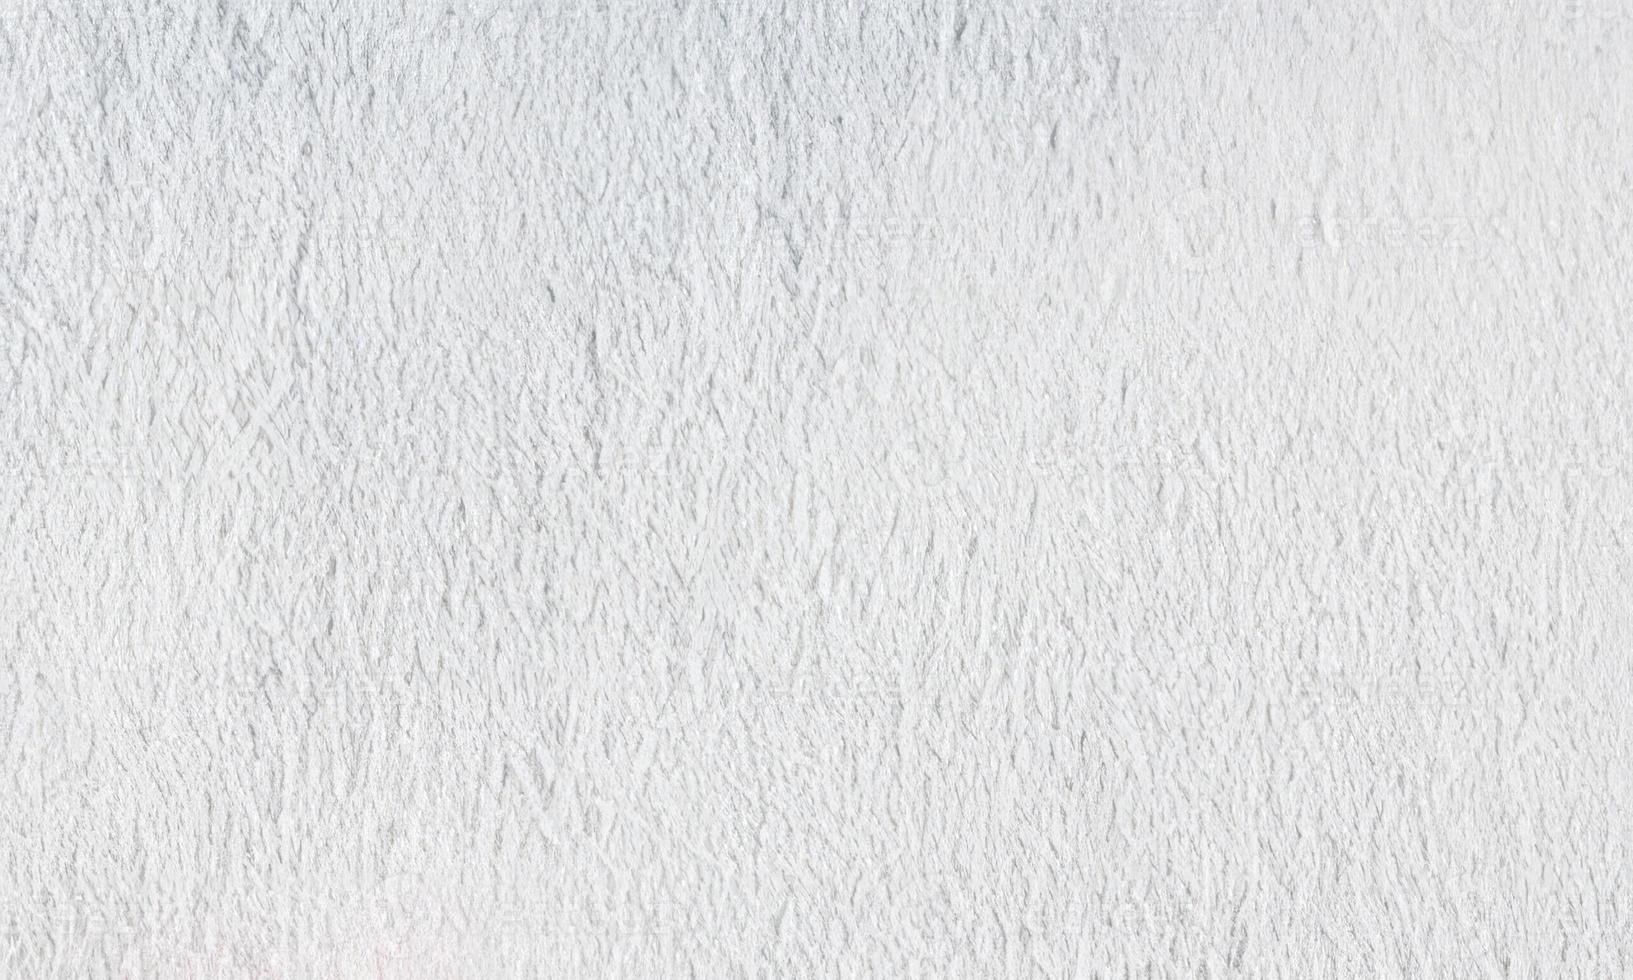 blanco pintado pared textura fondo, grueso cepillo golpes foto